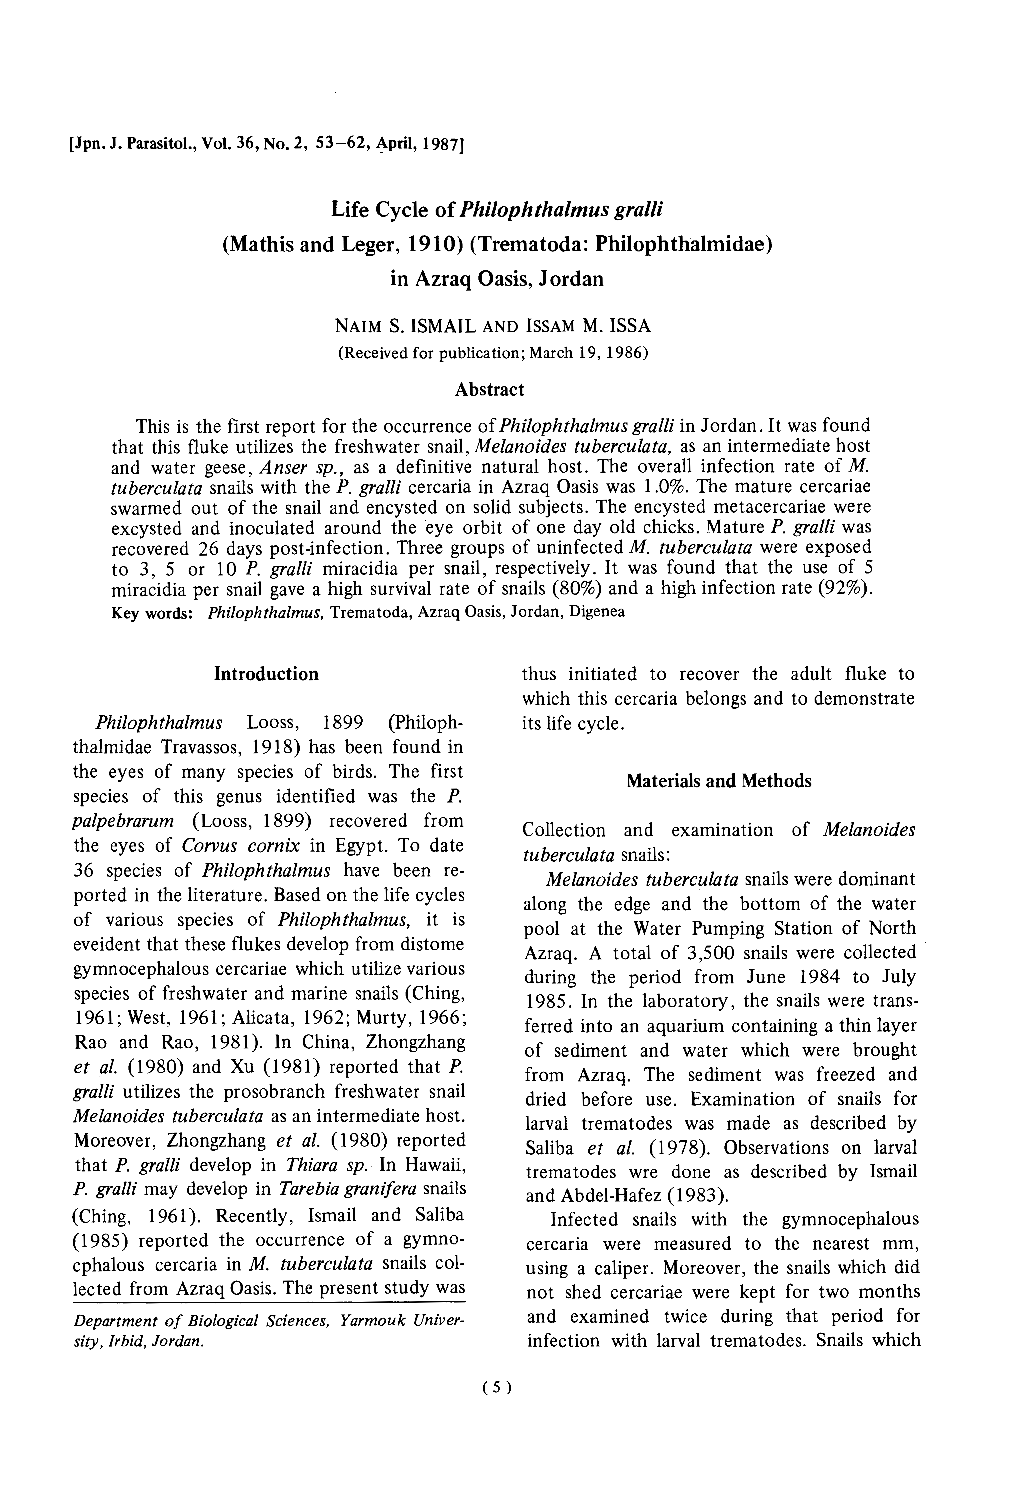 Life Cycle of Philophthalmus Gralli (Mathis and Leger, 1910) (Trematoda: Philophthalmidae) in Azraq Oasis, Jordan